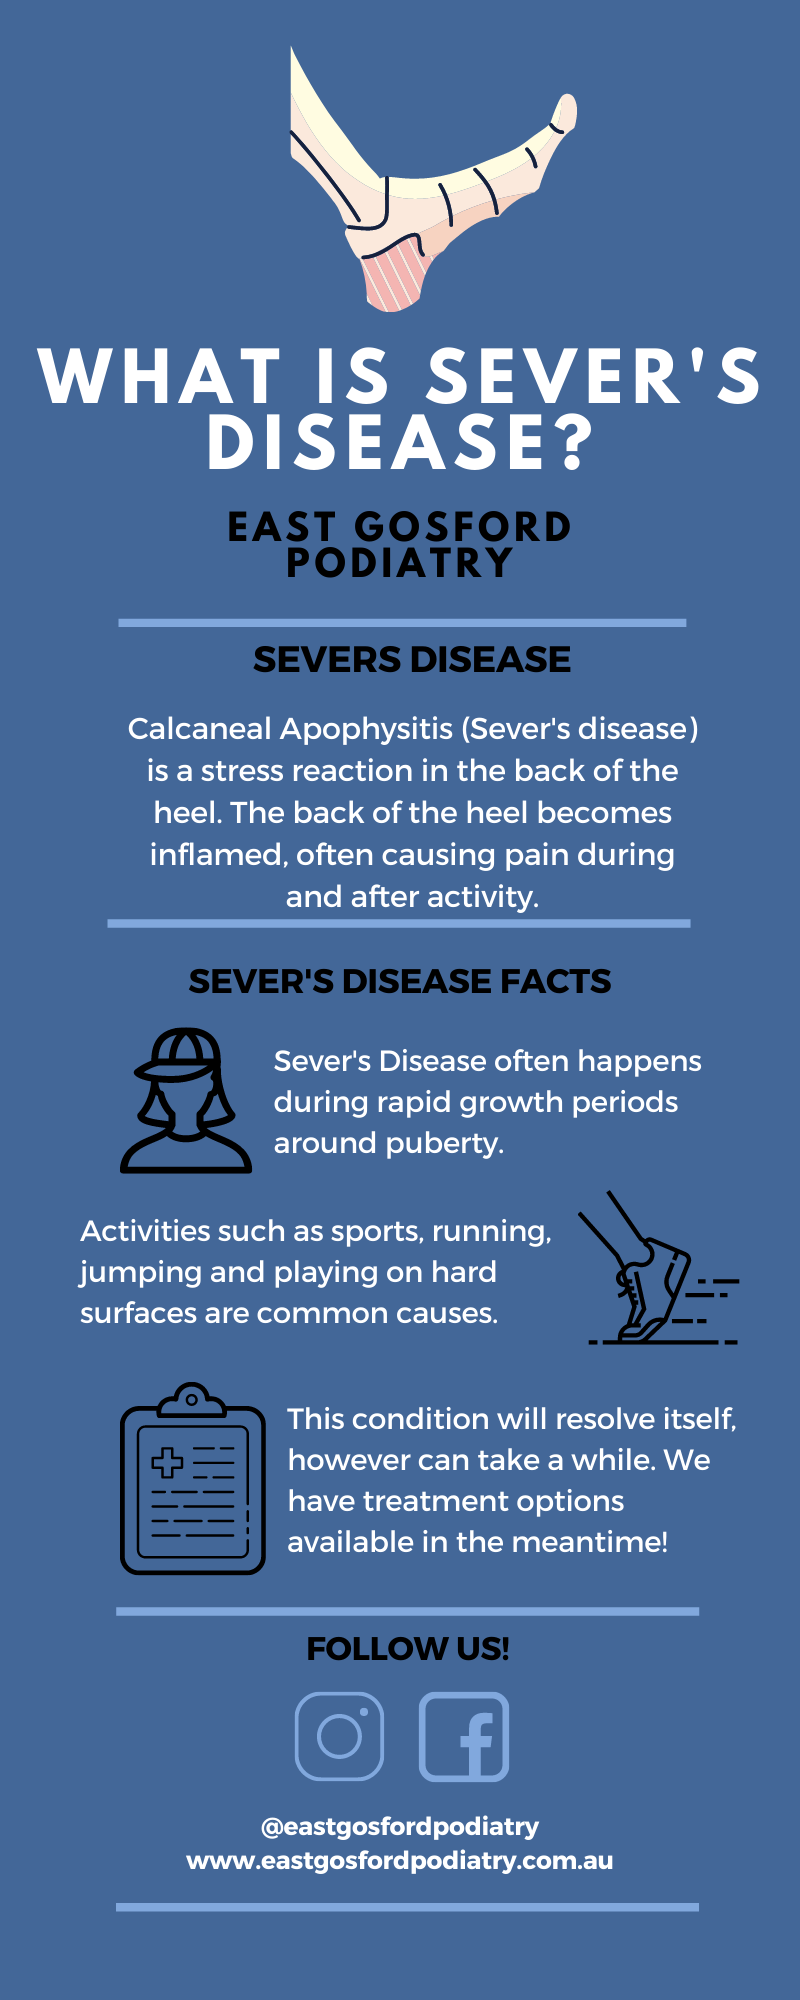 What is Sever's Disease?